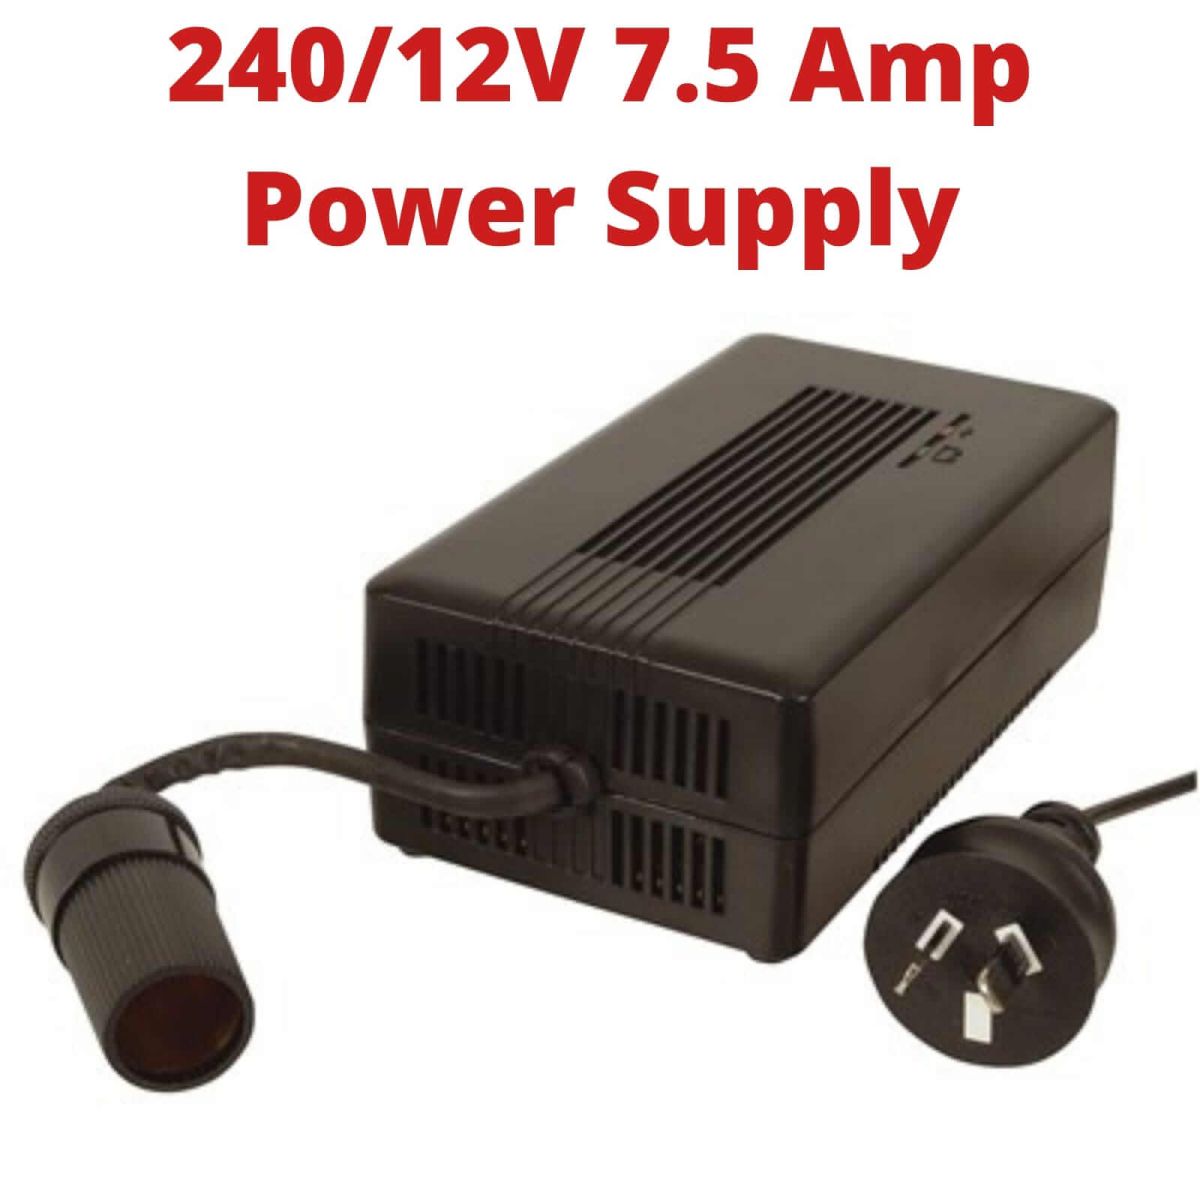 12VDC 7.5 Amp Switchmode Power Supply, portable fridge power